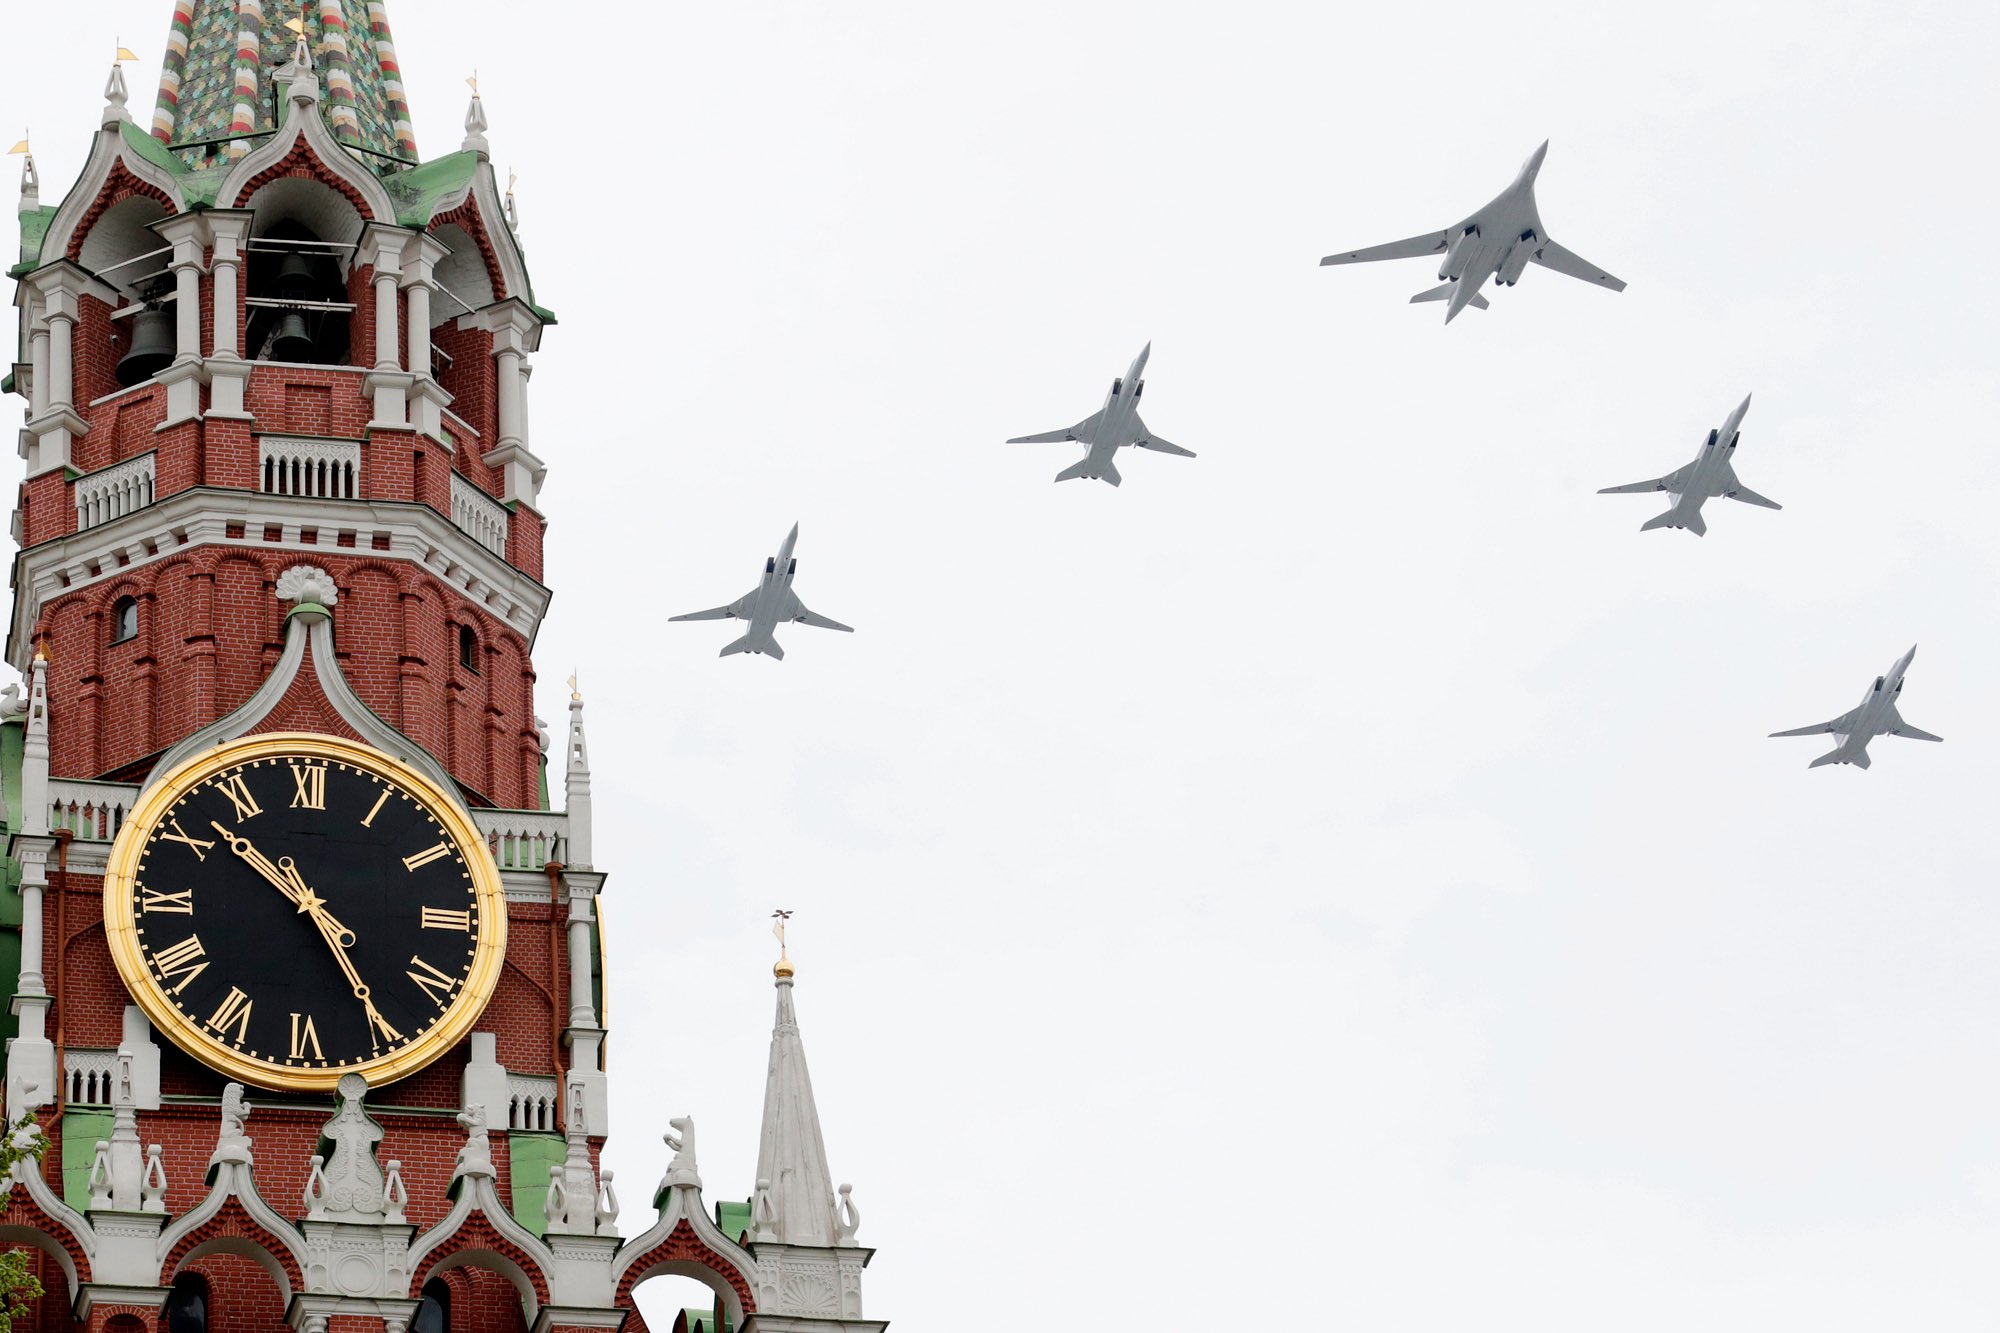 9 май кремль. Спасская башня Кремля салют. Самолеты над Кремлем. Самолеты над красной площадью. Самолеты над Кремлем парад.